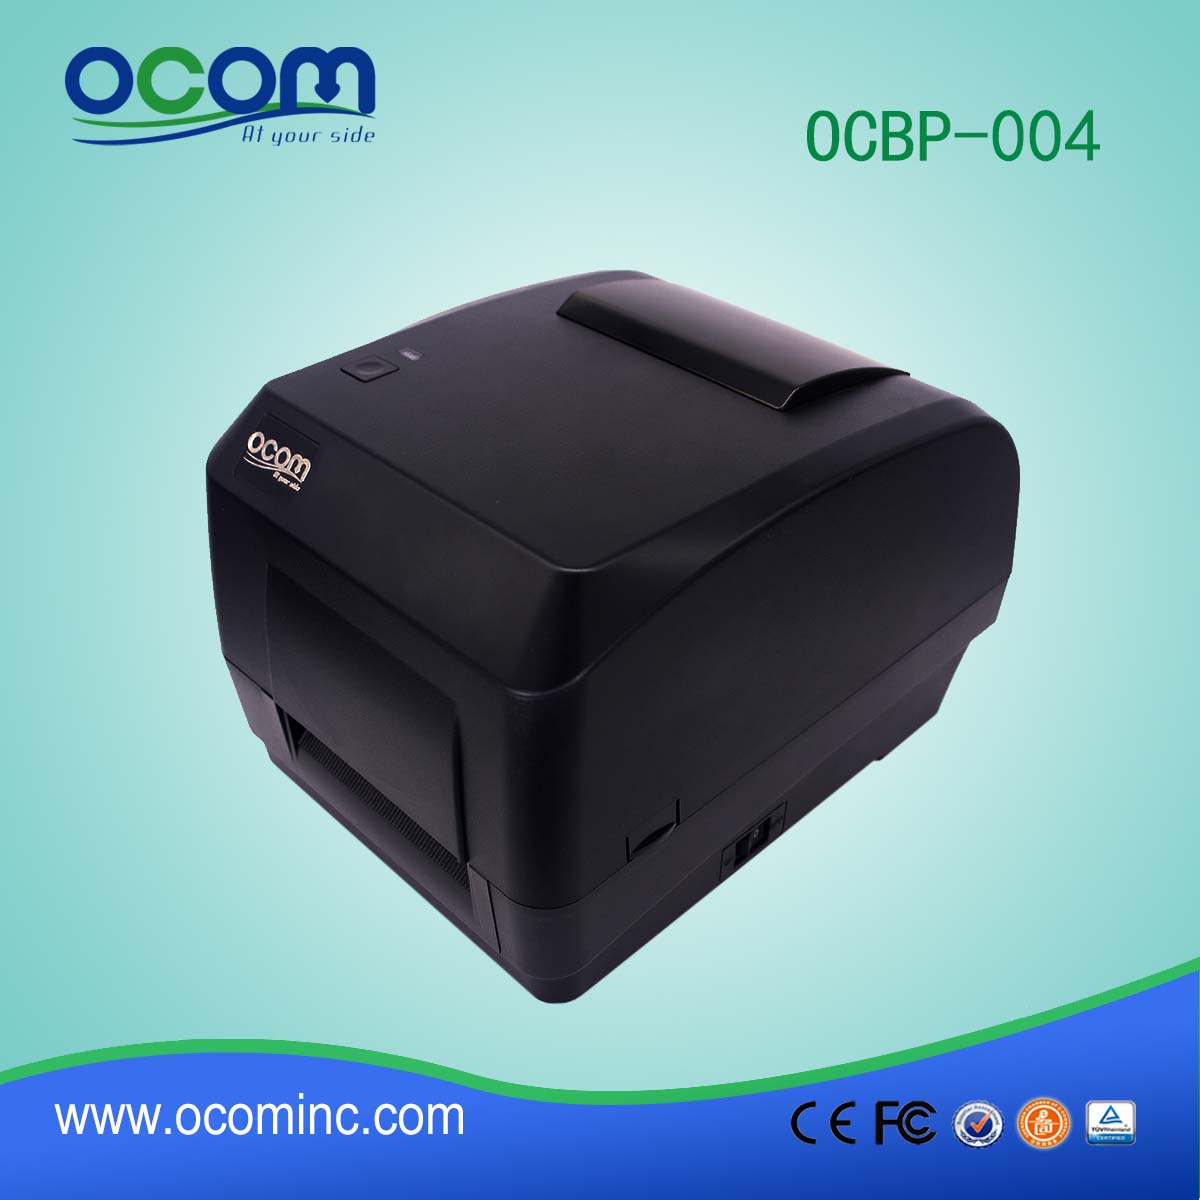 OCBP-004 Θερμική μεταφορά και άμεση θερμική εκτύπωση ετικετών γραμμωτού κώδικα